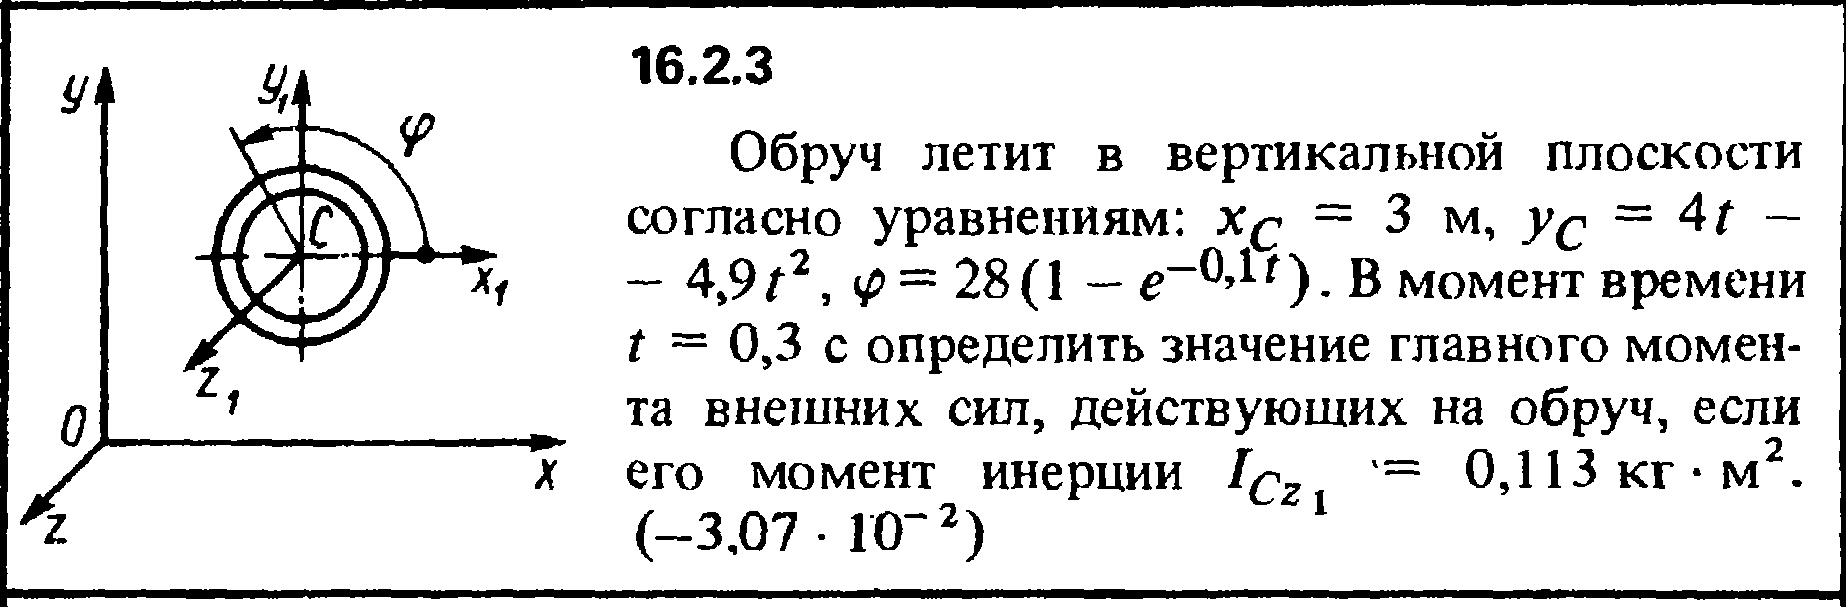 Решение задачи 16.2.3 из сборника Кепе О.Е. 1989 года